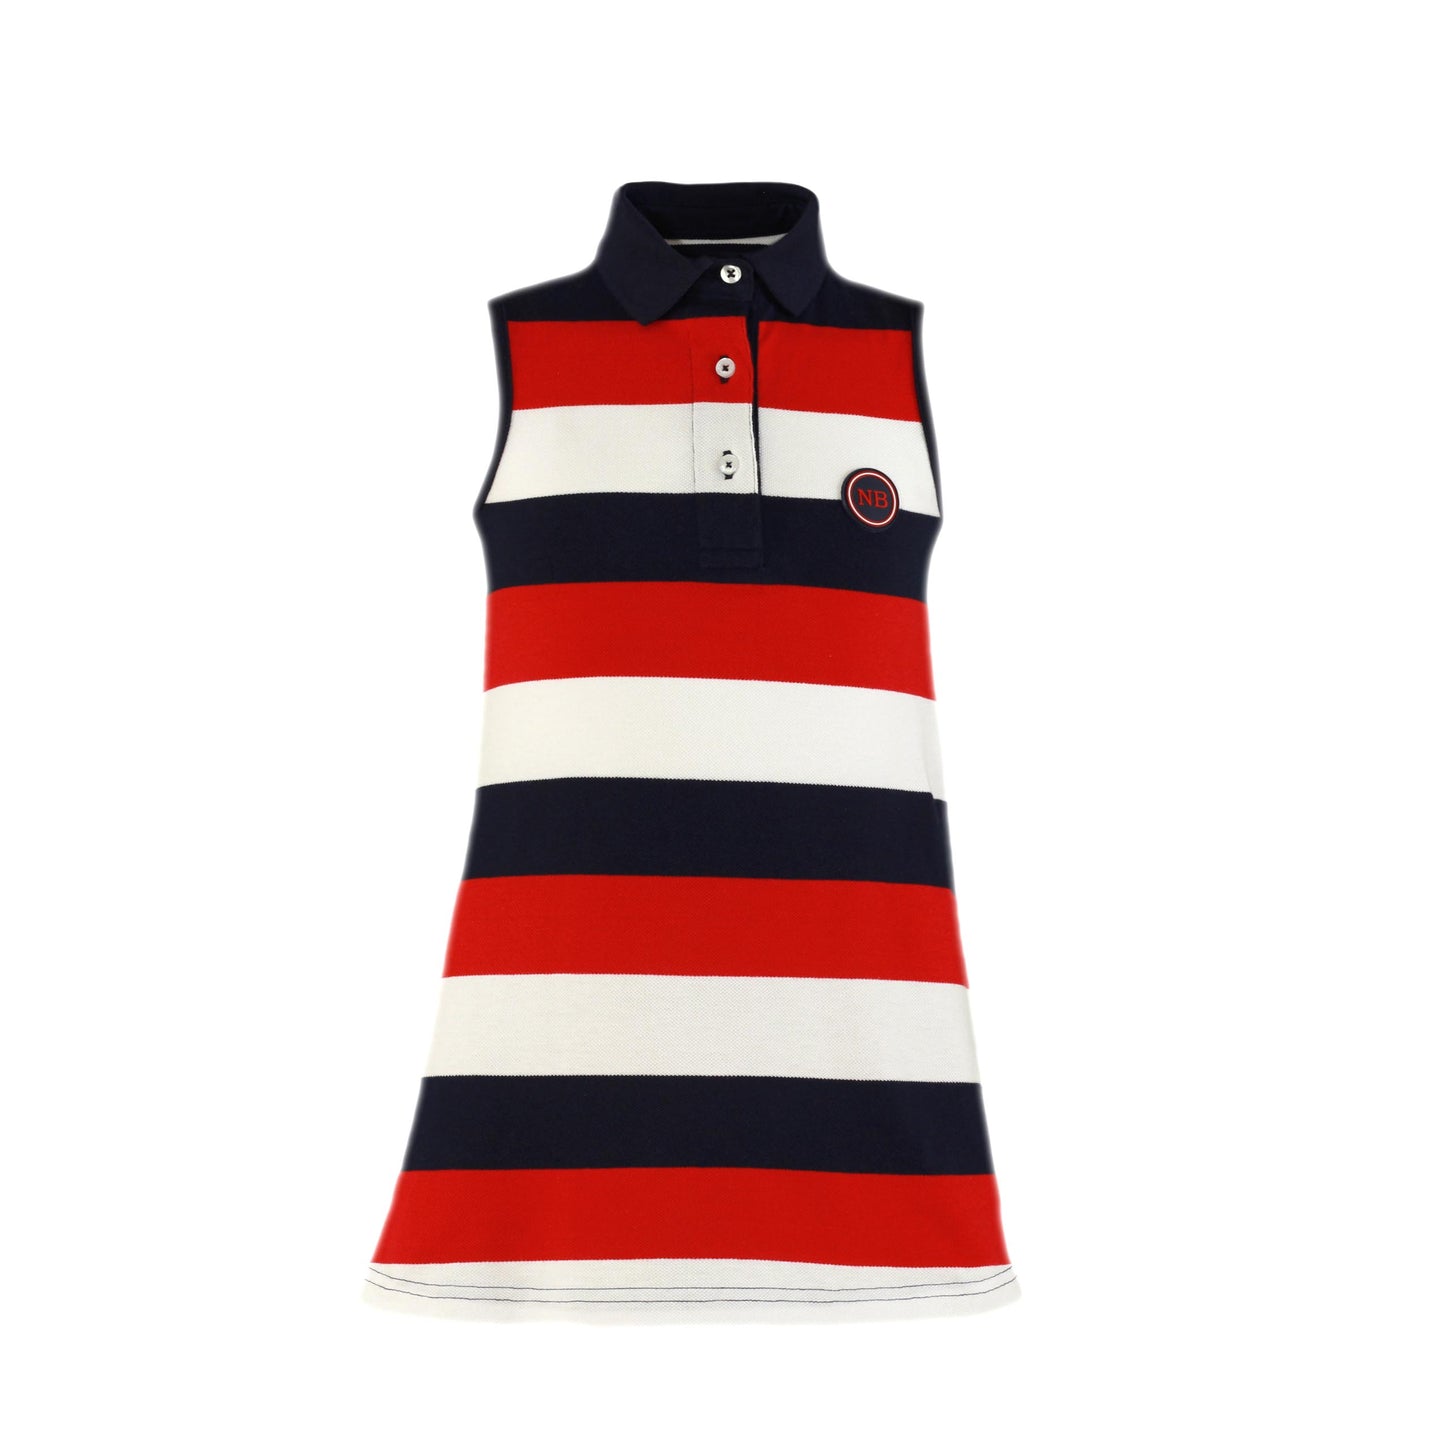 SS23 MIRANDA NEL BLU Navy & Red Stripe Girls Polo Dress - 1400